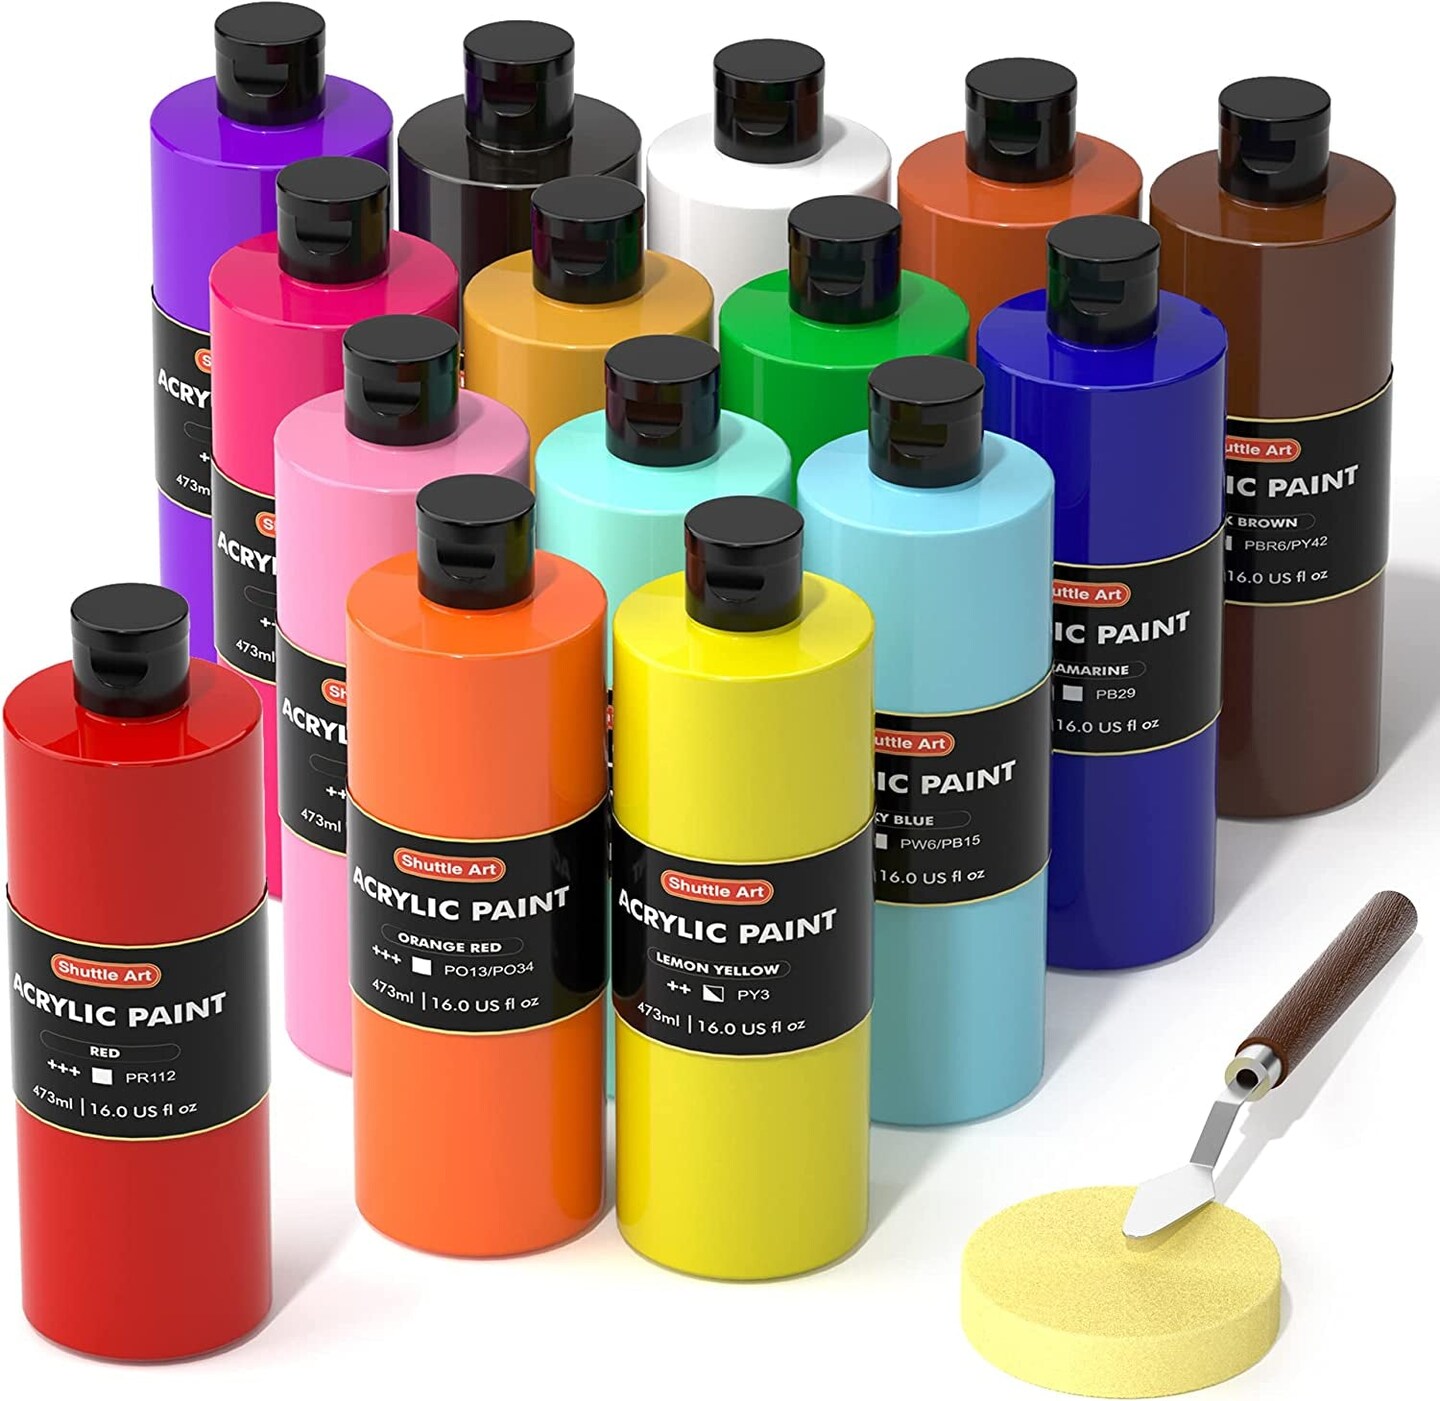 Shuttle Art acrylic paint, shuttle art 24 colors acrylic paint bottle set,  250ml/8.45oz each